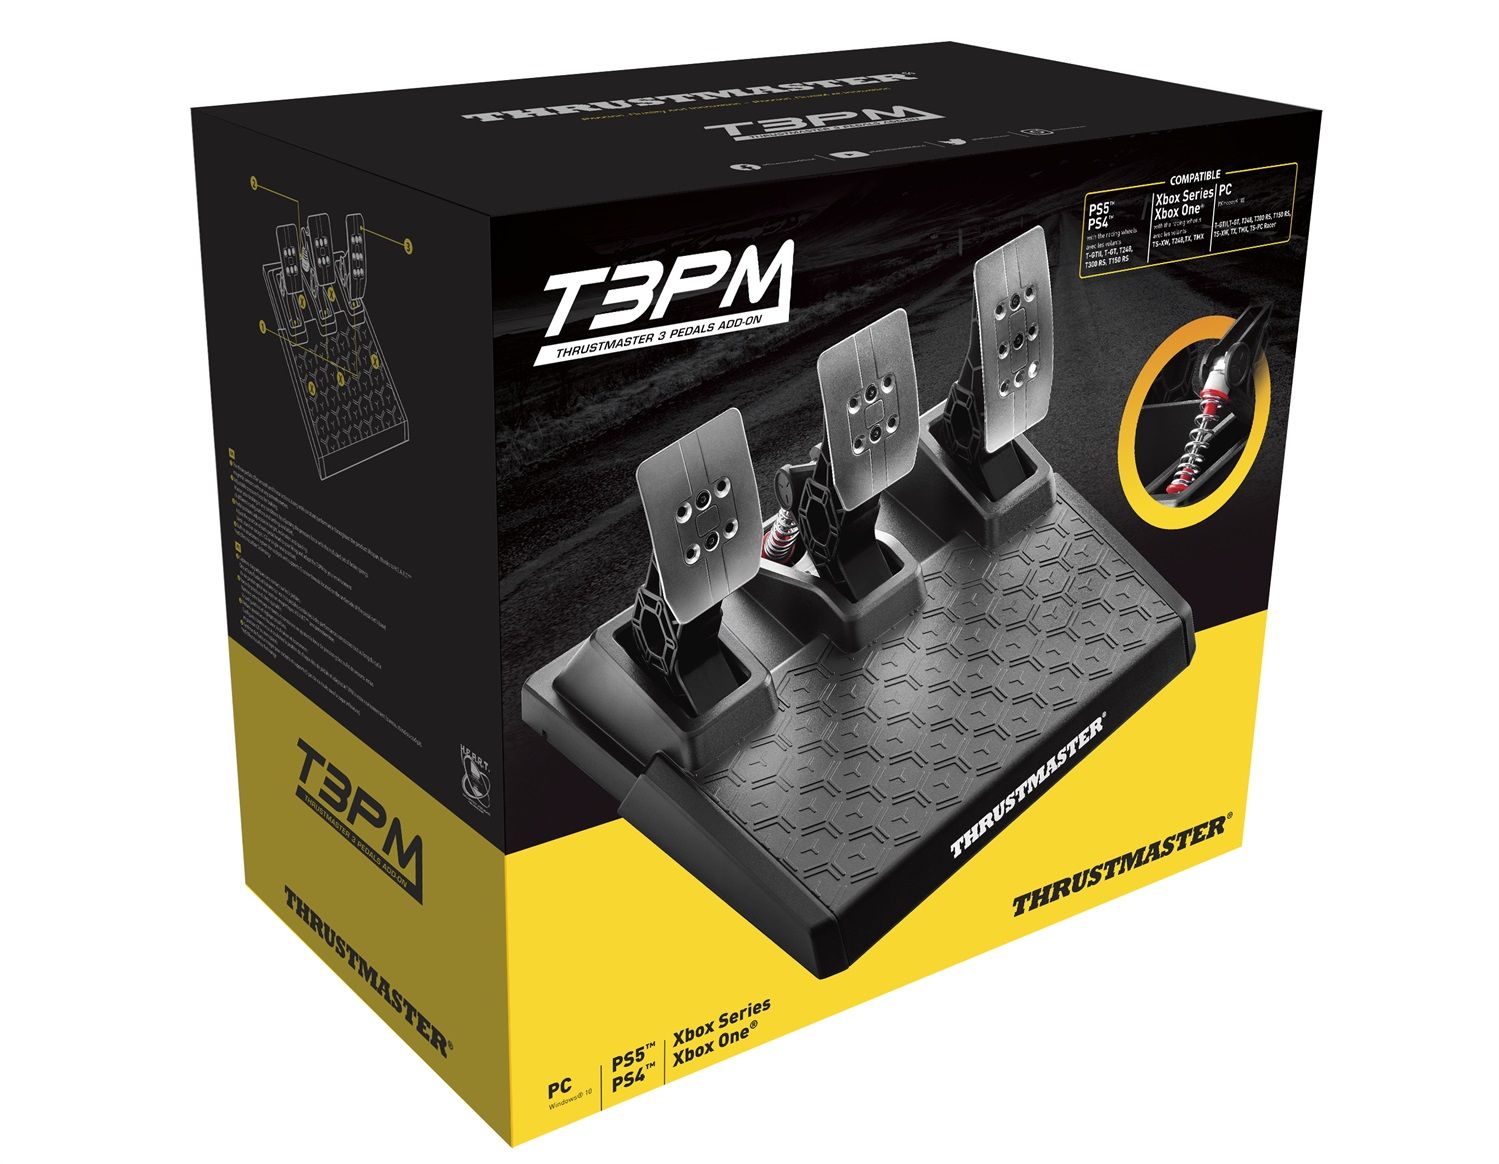 ThrustMaster T3PM, Confronta prezzi